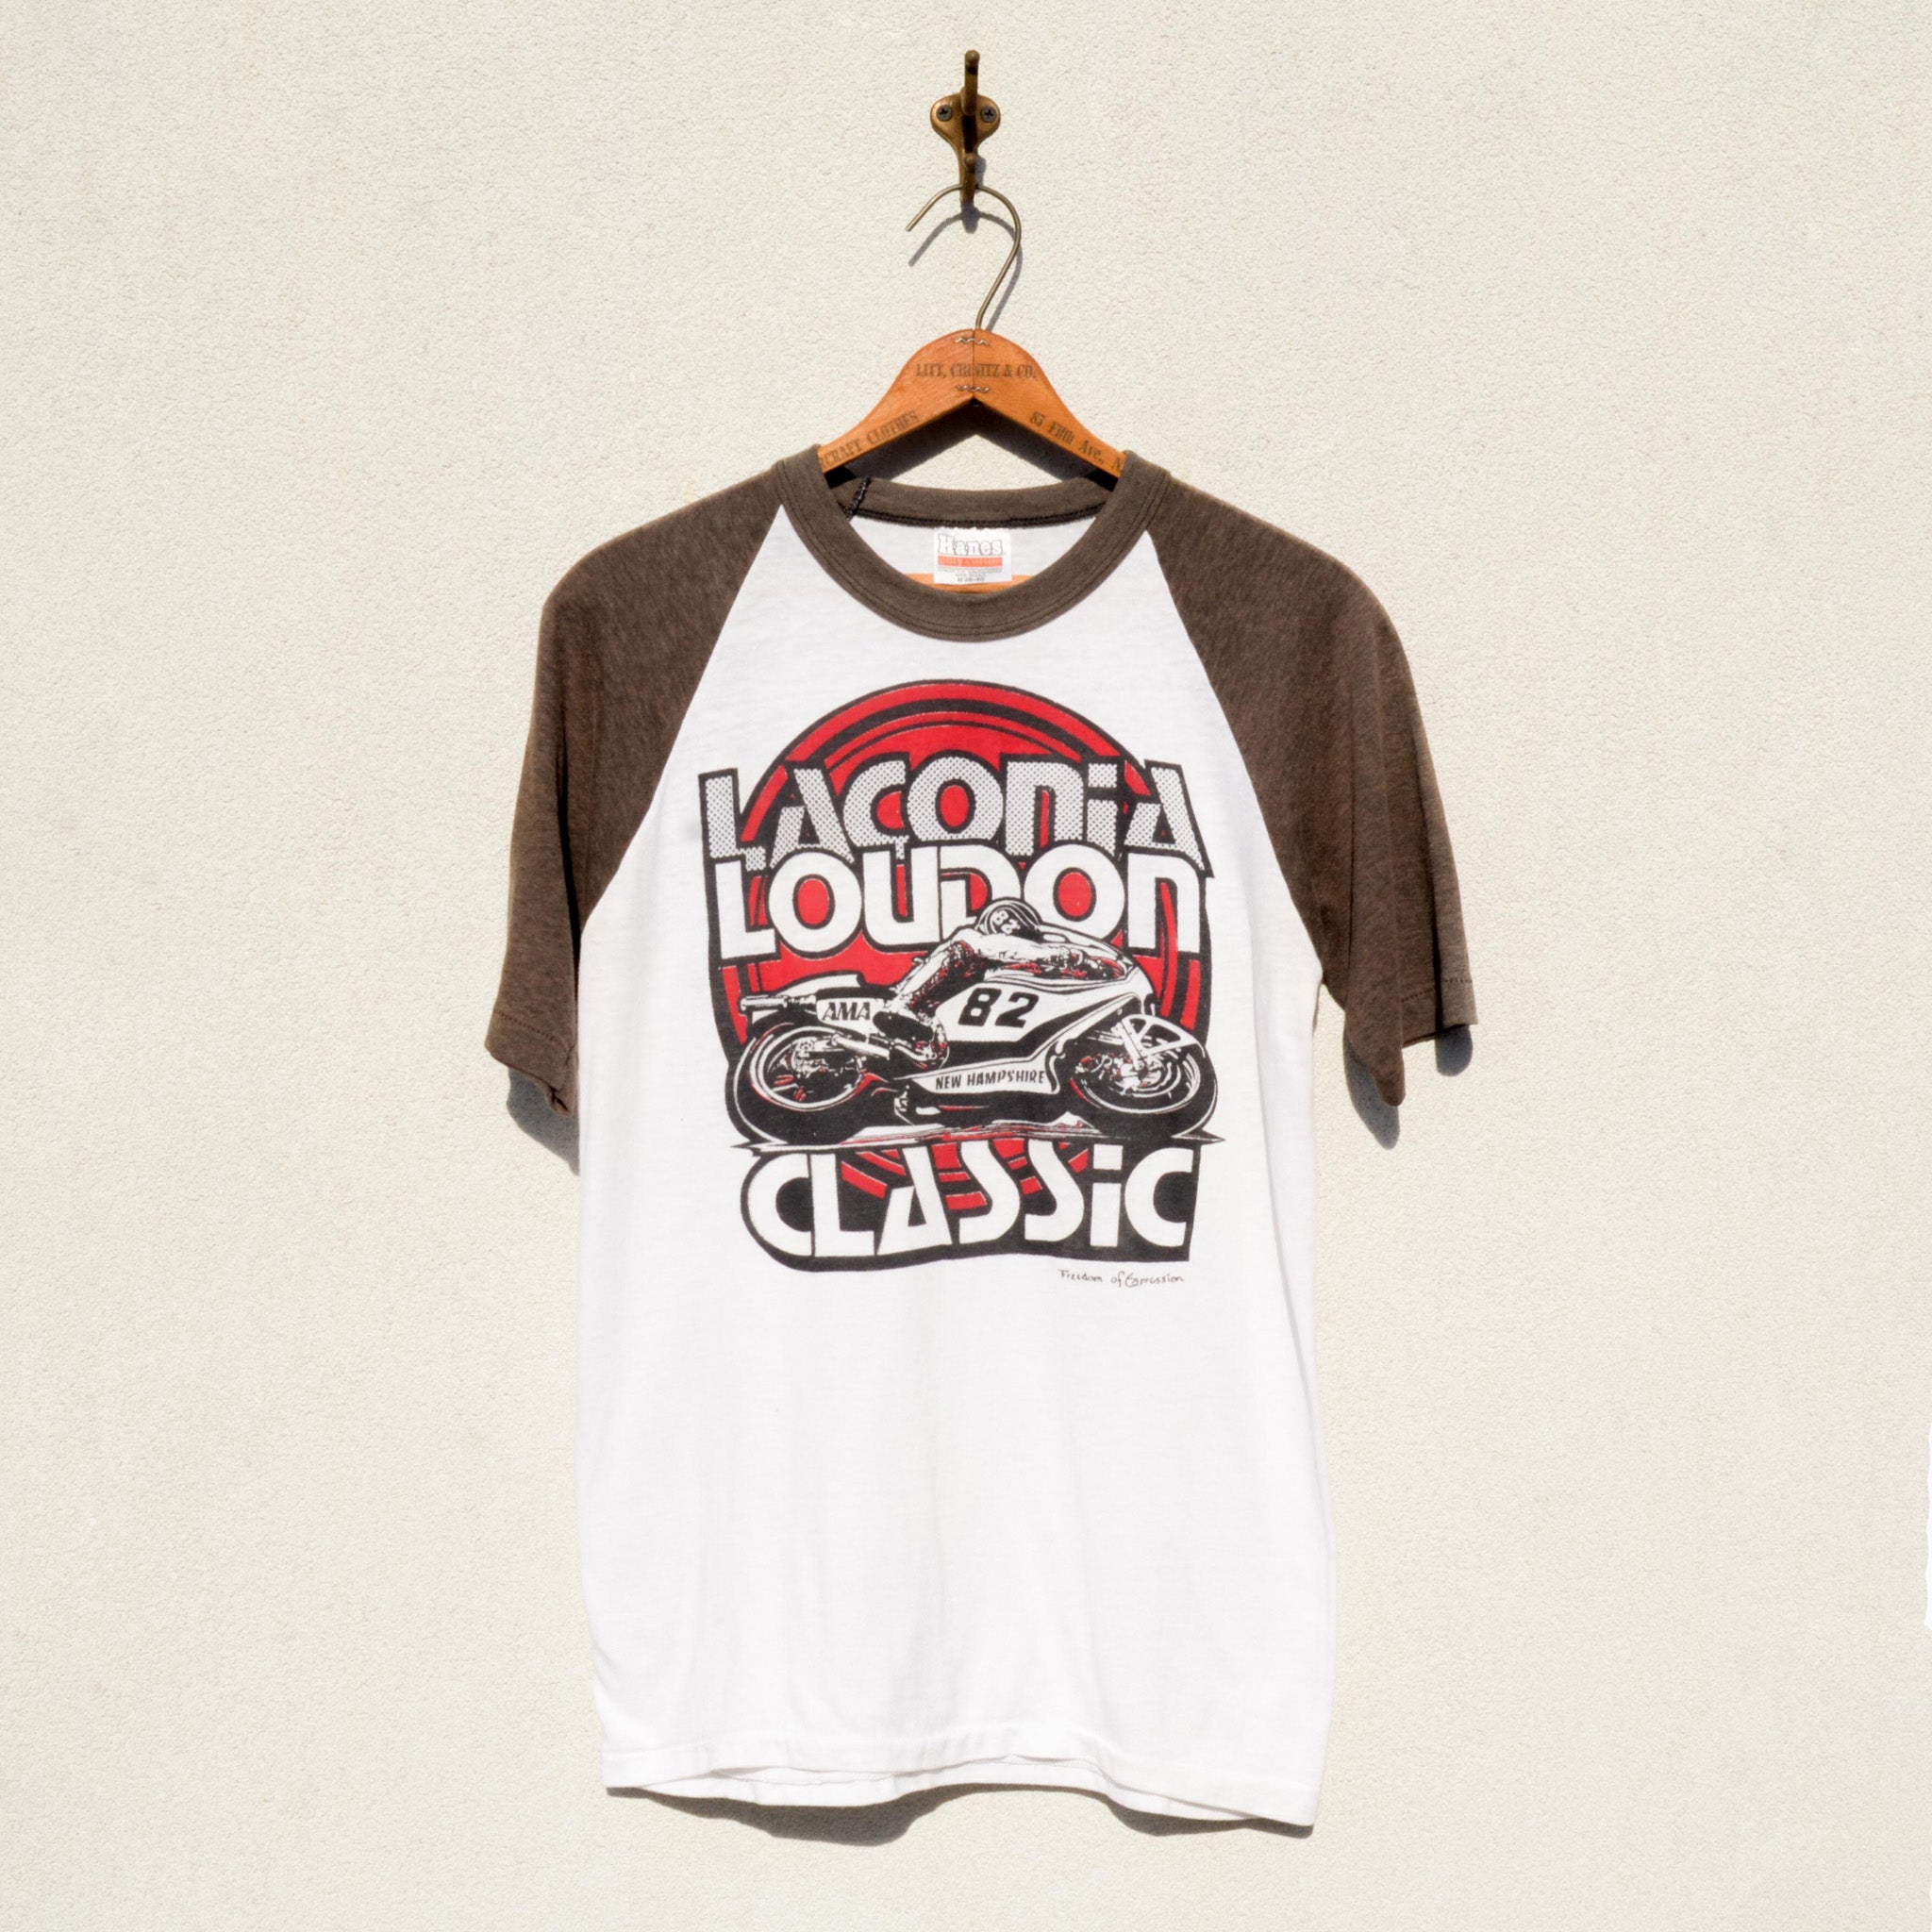 Hanes - AMA '82 Laconia Loudon Classic Tee Shirt – Rugged